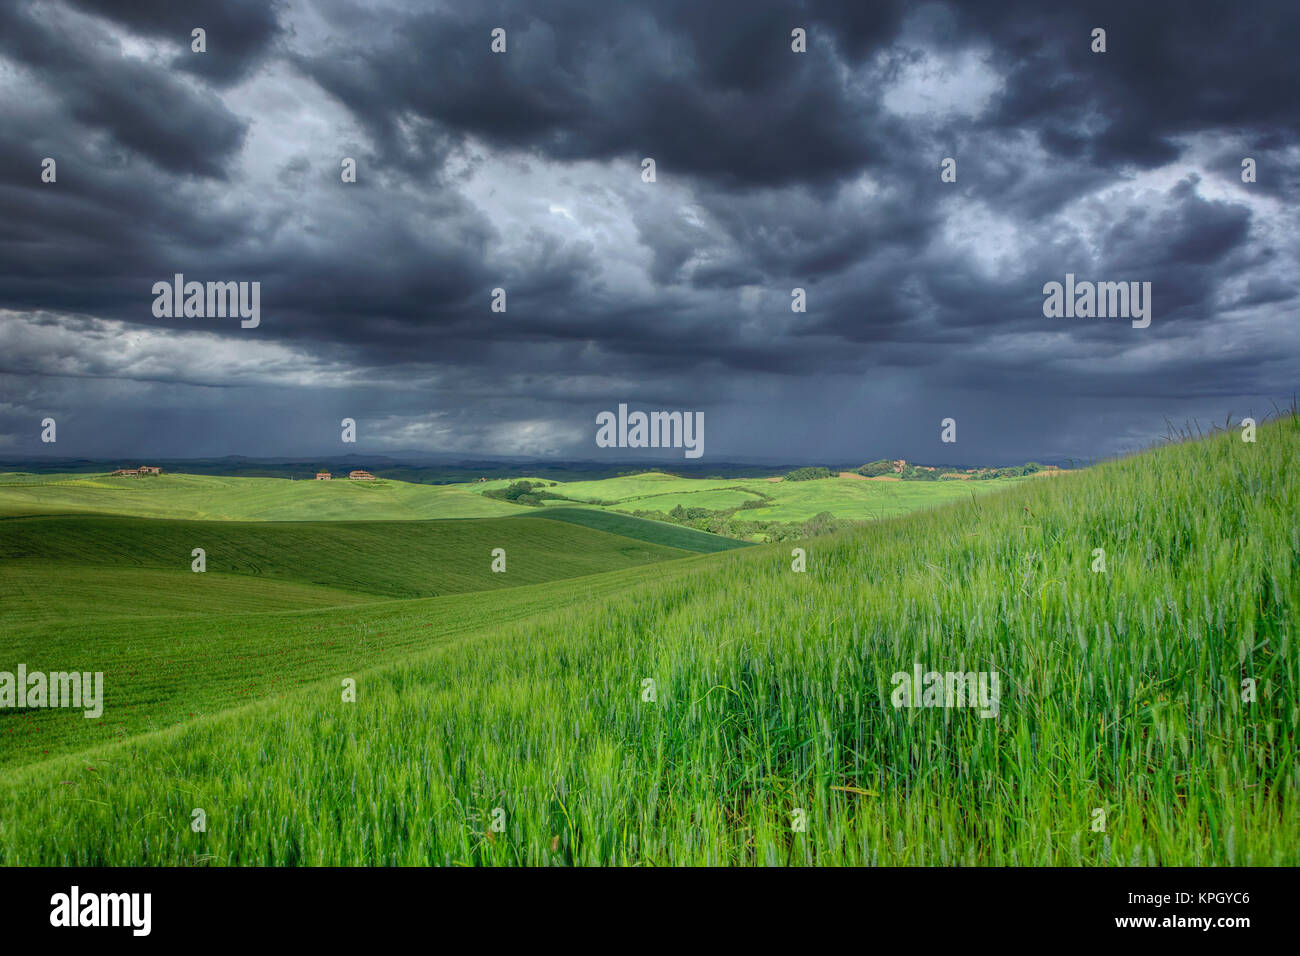 Nubes de tormenta sobre el campo de trigo agrícola, Toscana, Italia. Foto de stock